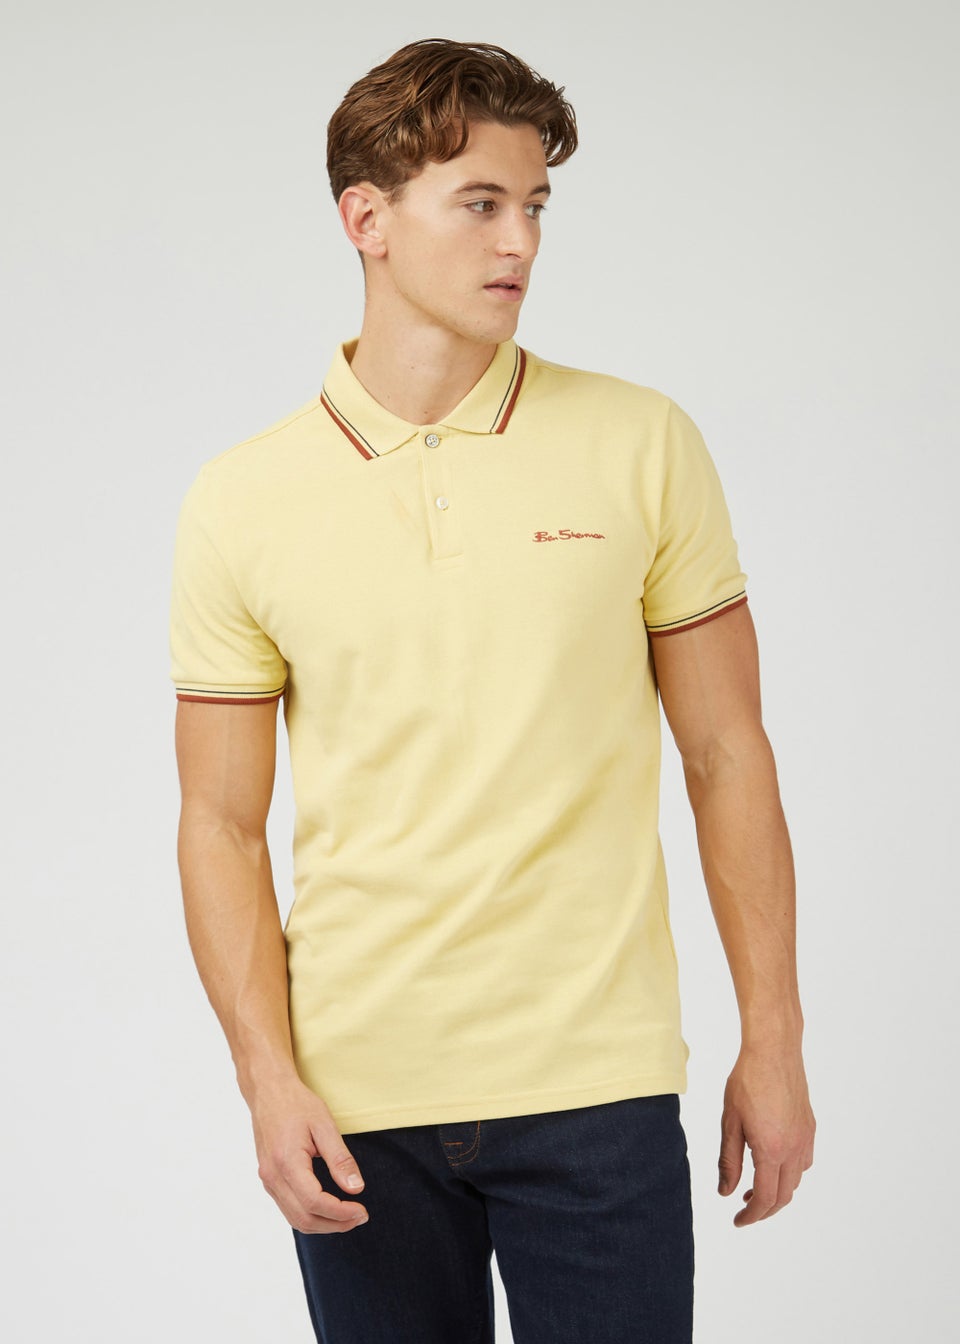 Ben Sherman Yellow Polo Shirt - Matalan